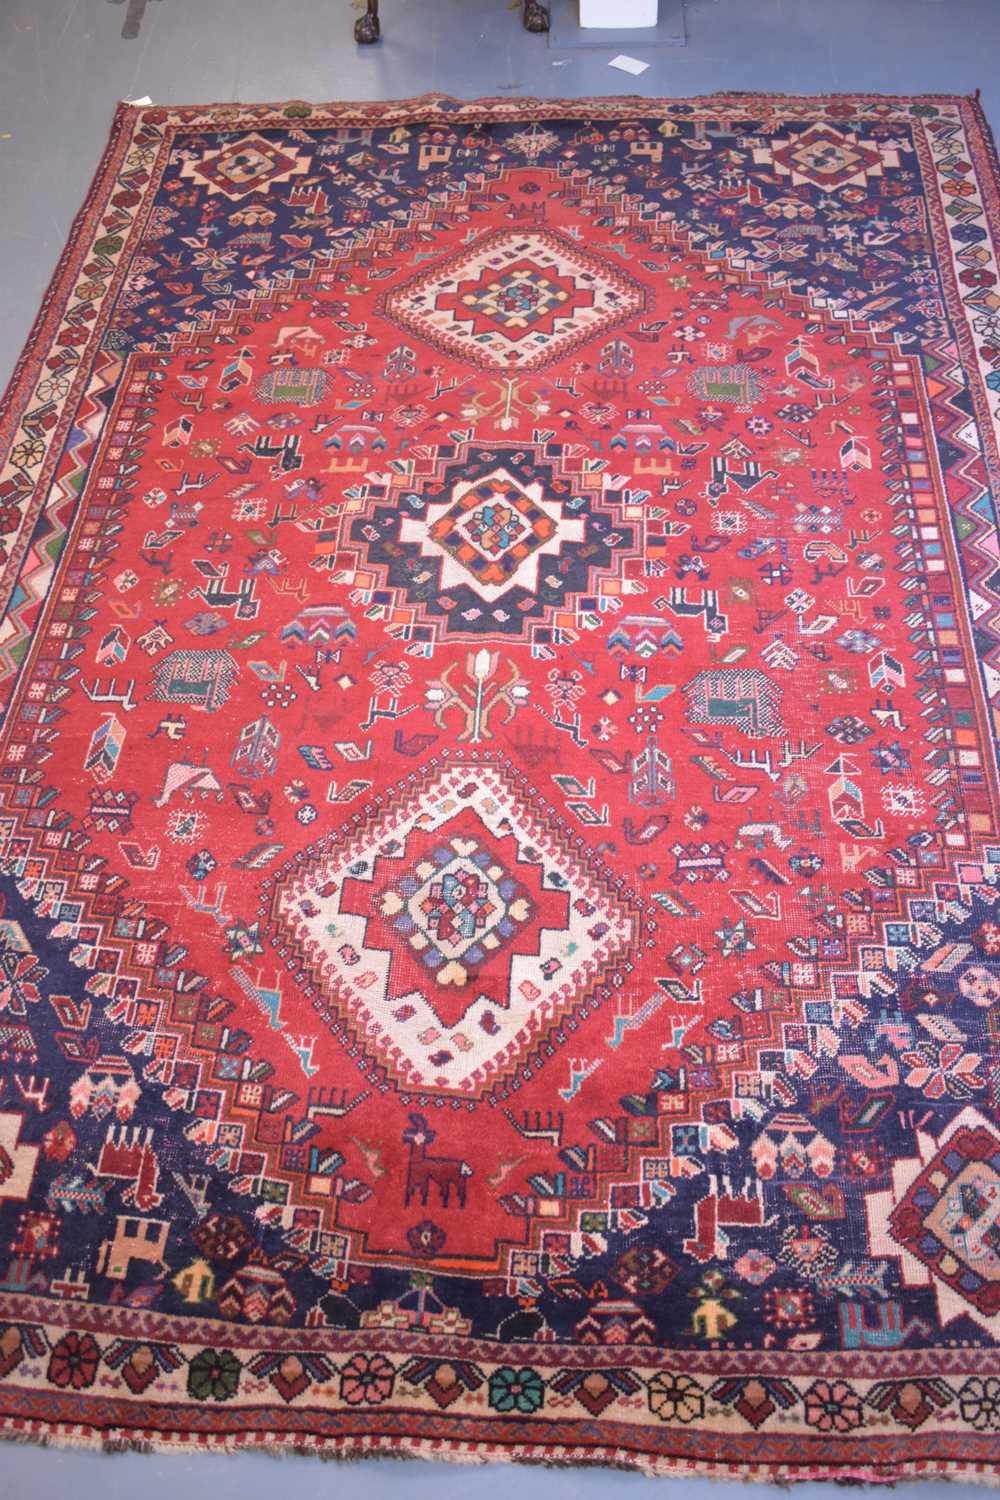 Lot 502 - Persian carpet.